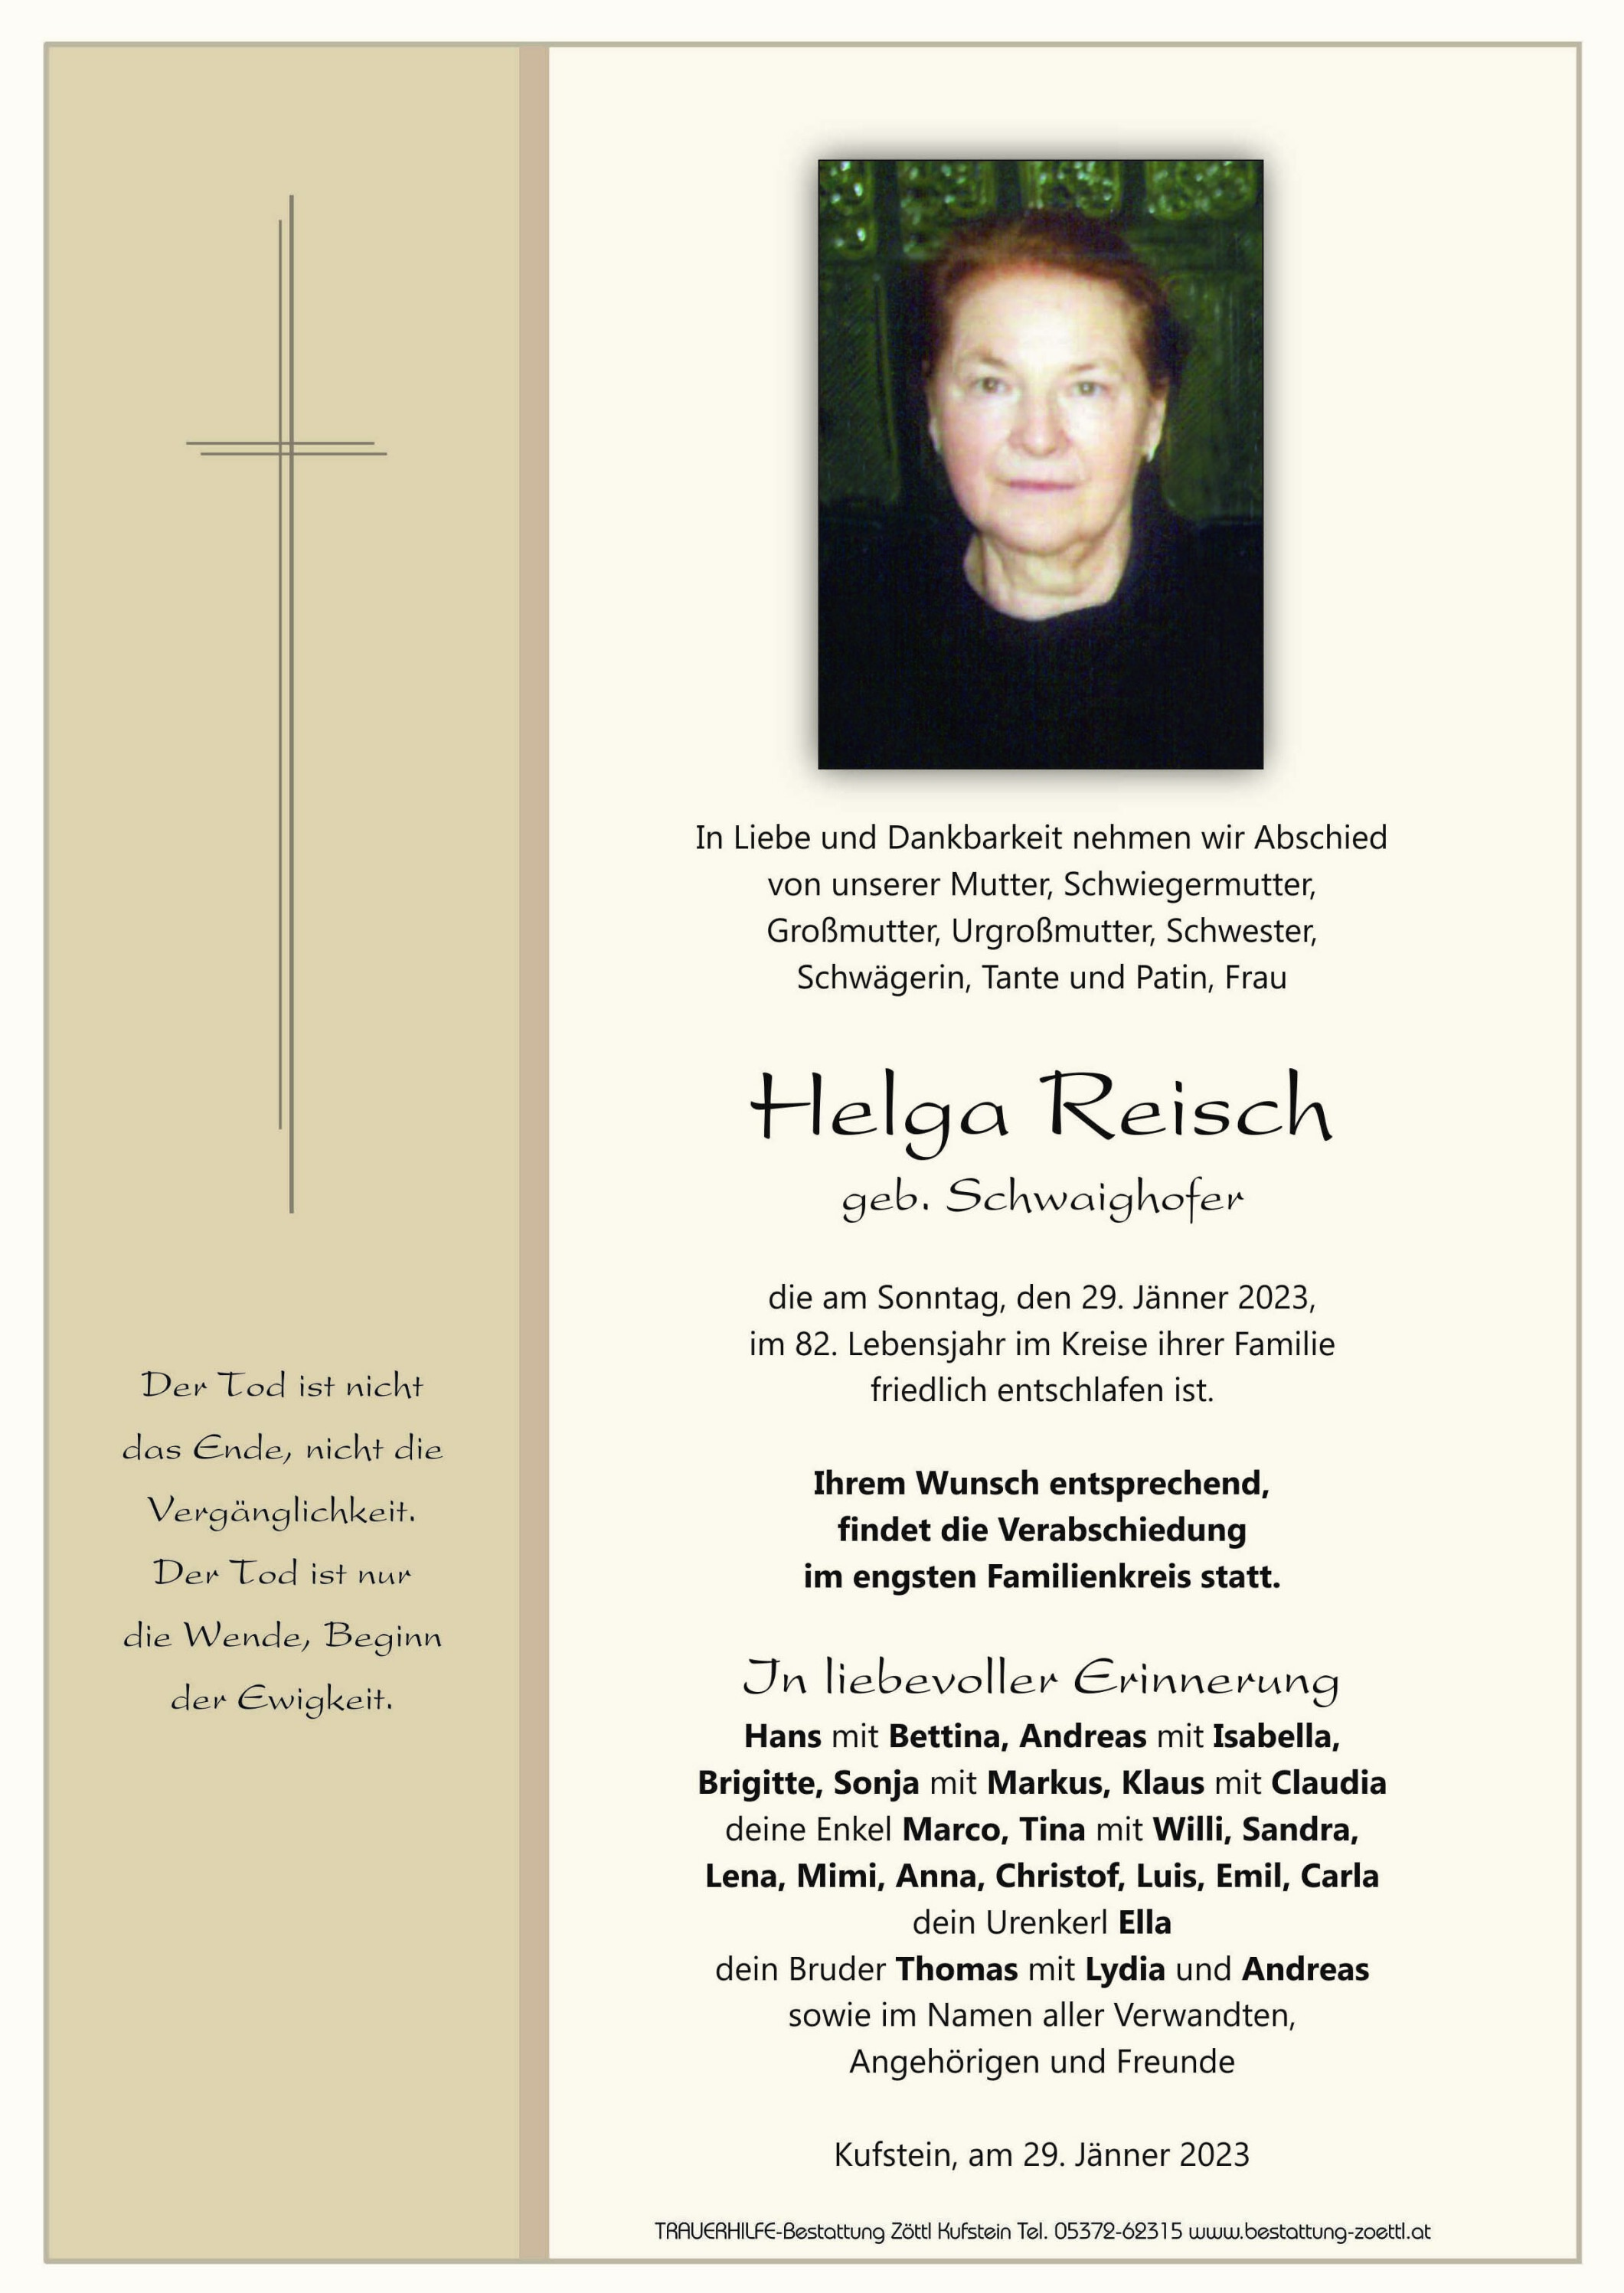 Helga Reisch